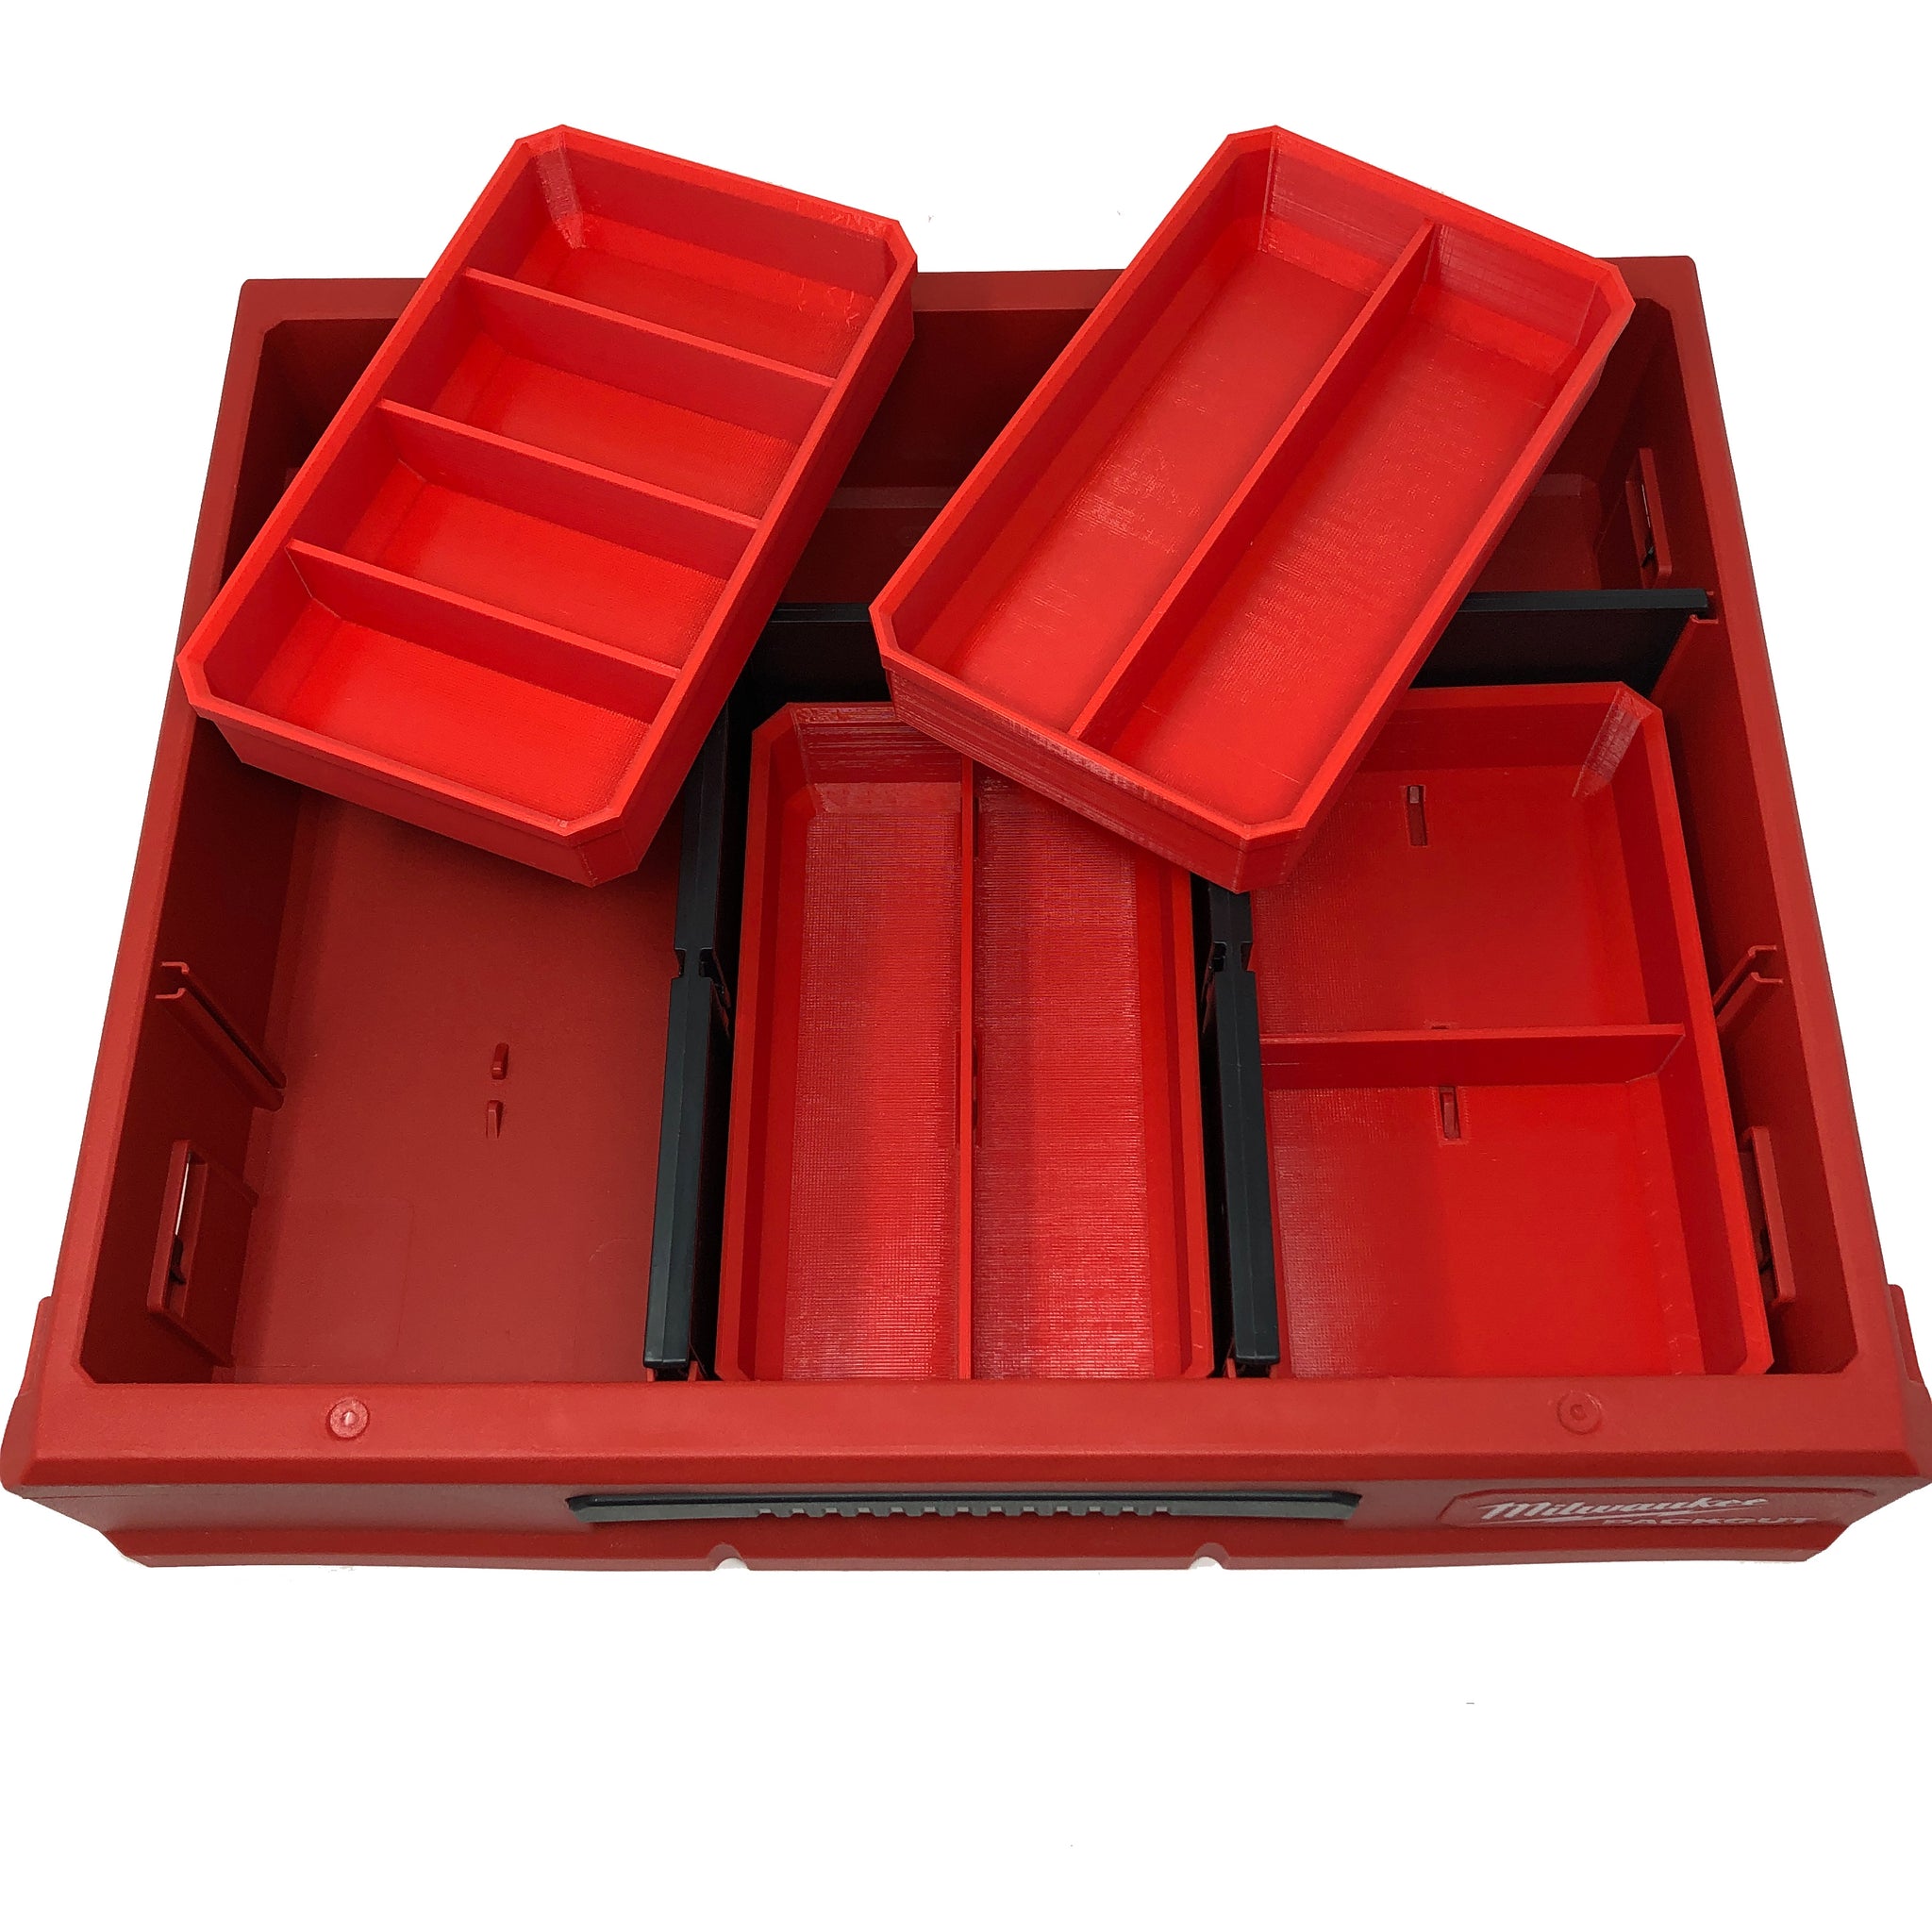 Packout Drawer Storage Bins Stackable (2Bin Set)